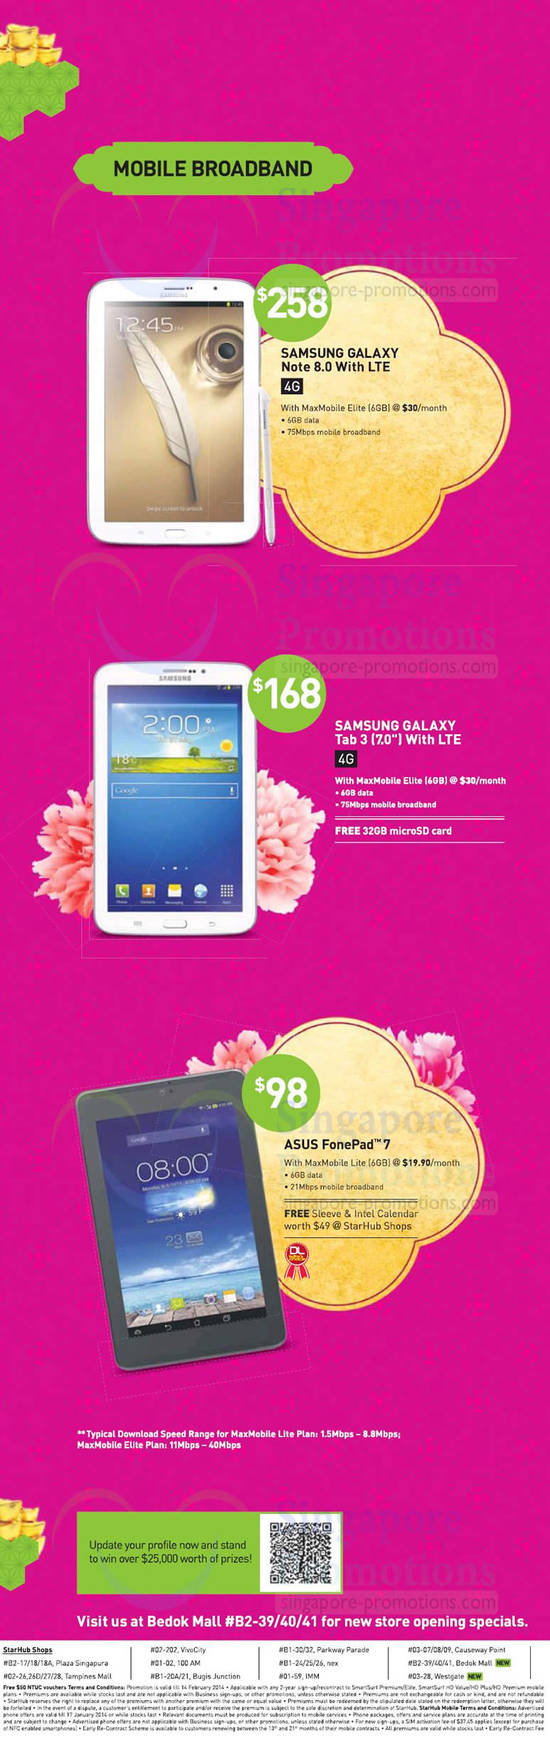 Samsung Galaxy Note 8.0, Samsung Galaxy Tab 3 7.0, ASUS FonePad 7